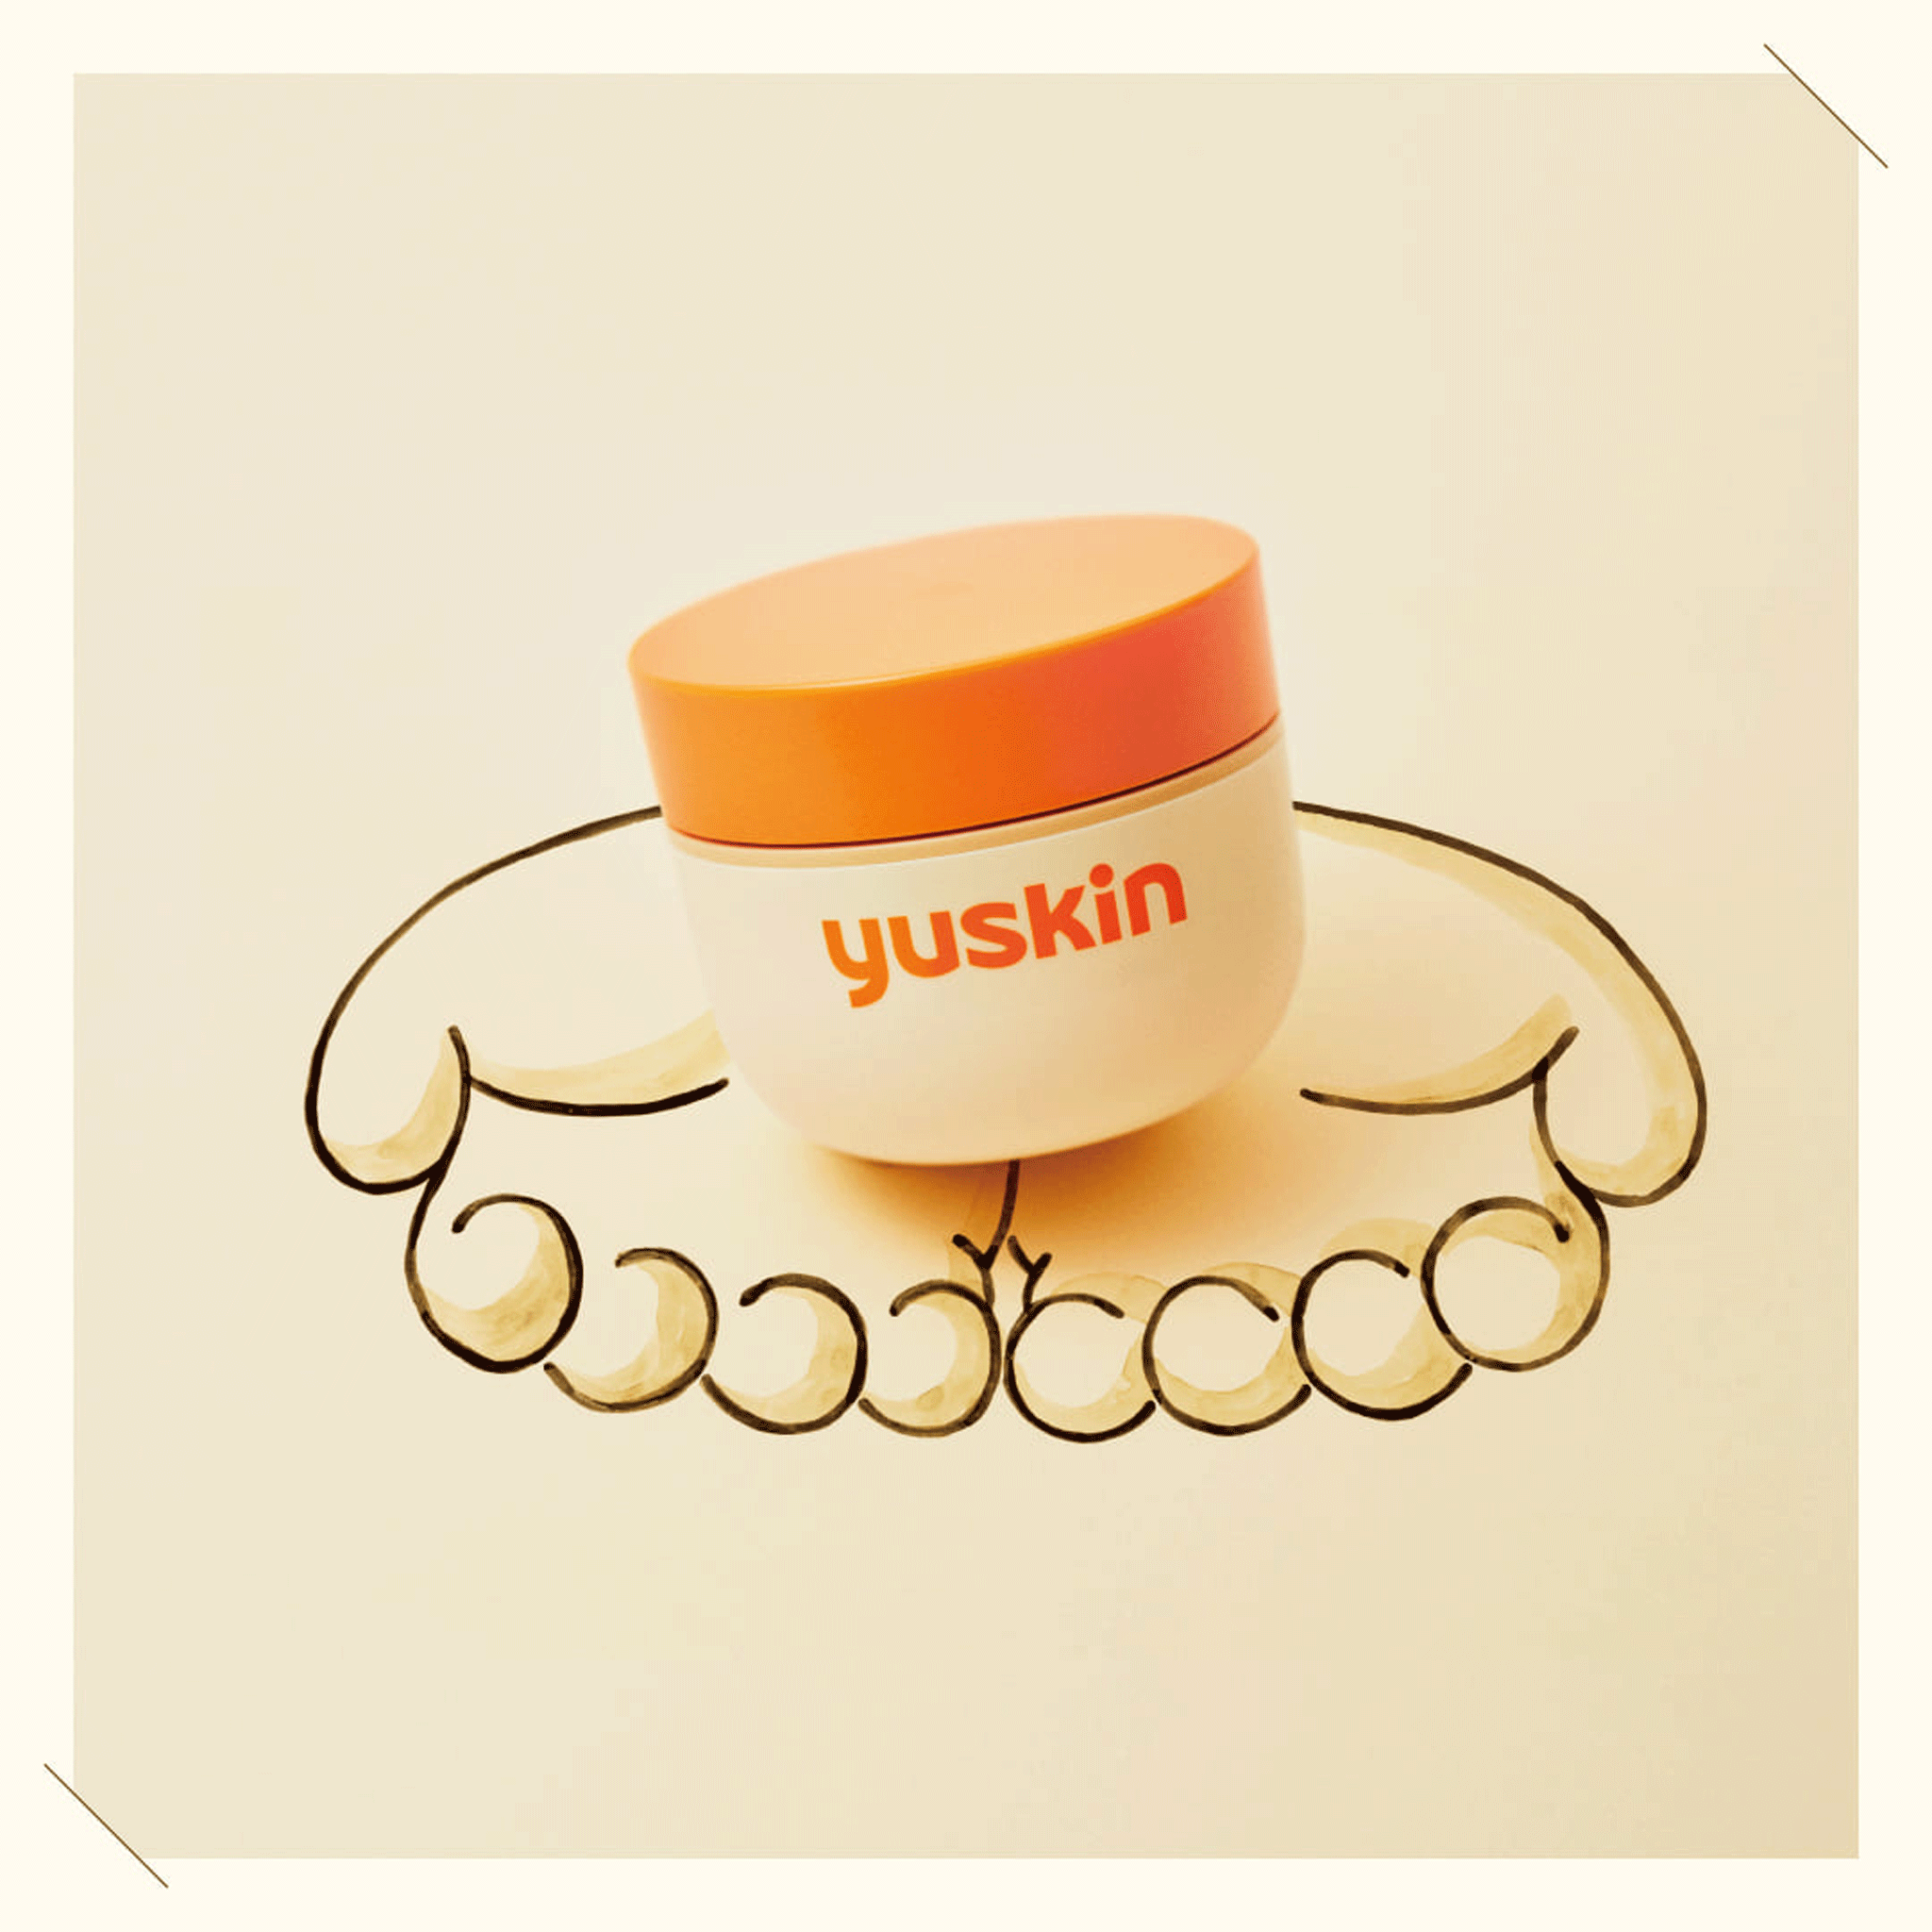 Yuskin A-Series Family Medical Cream for Dry Skin-120g